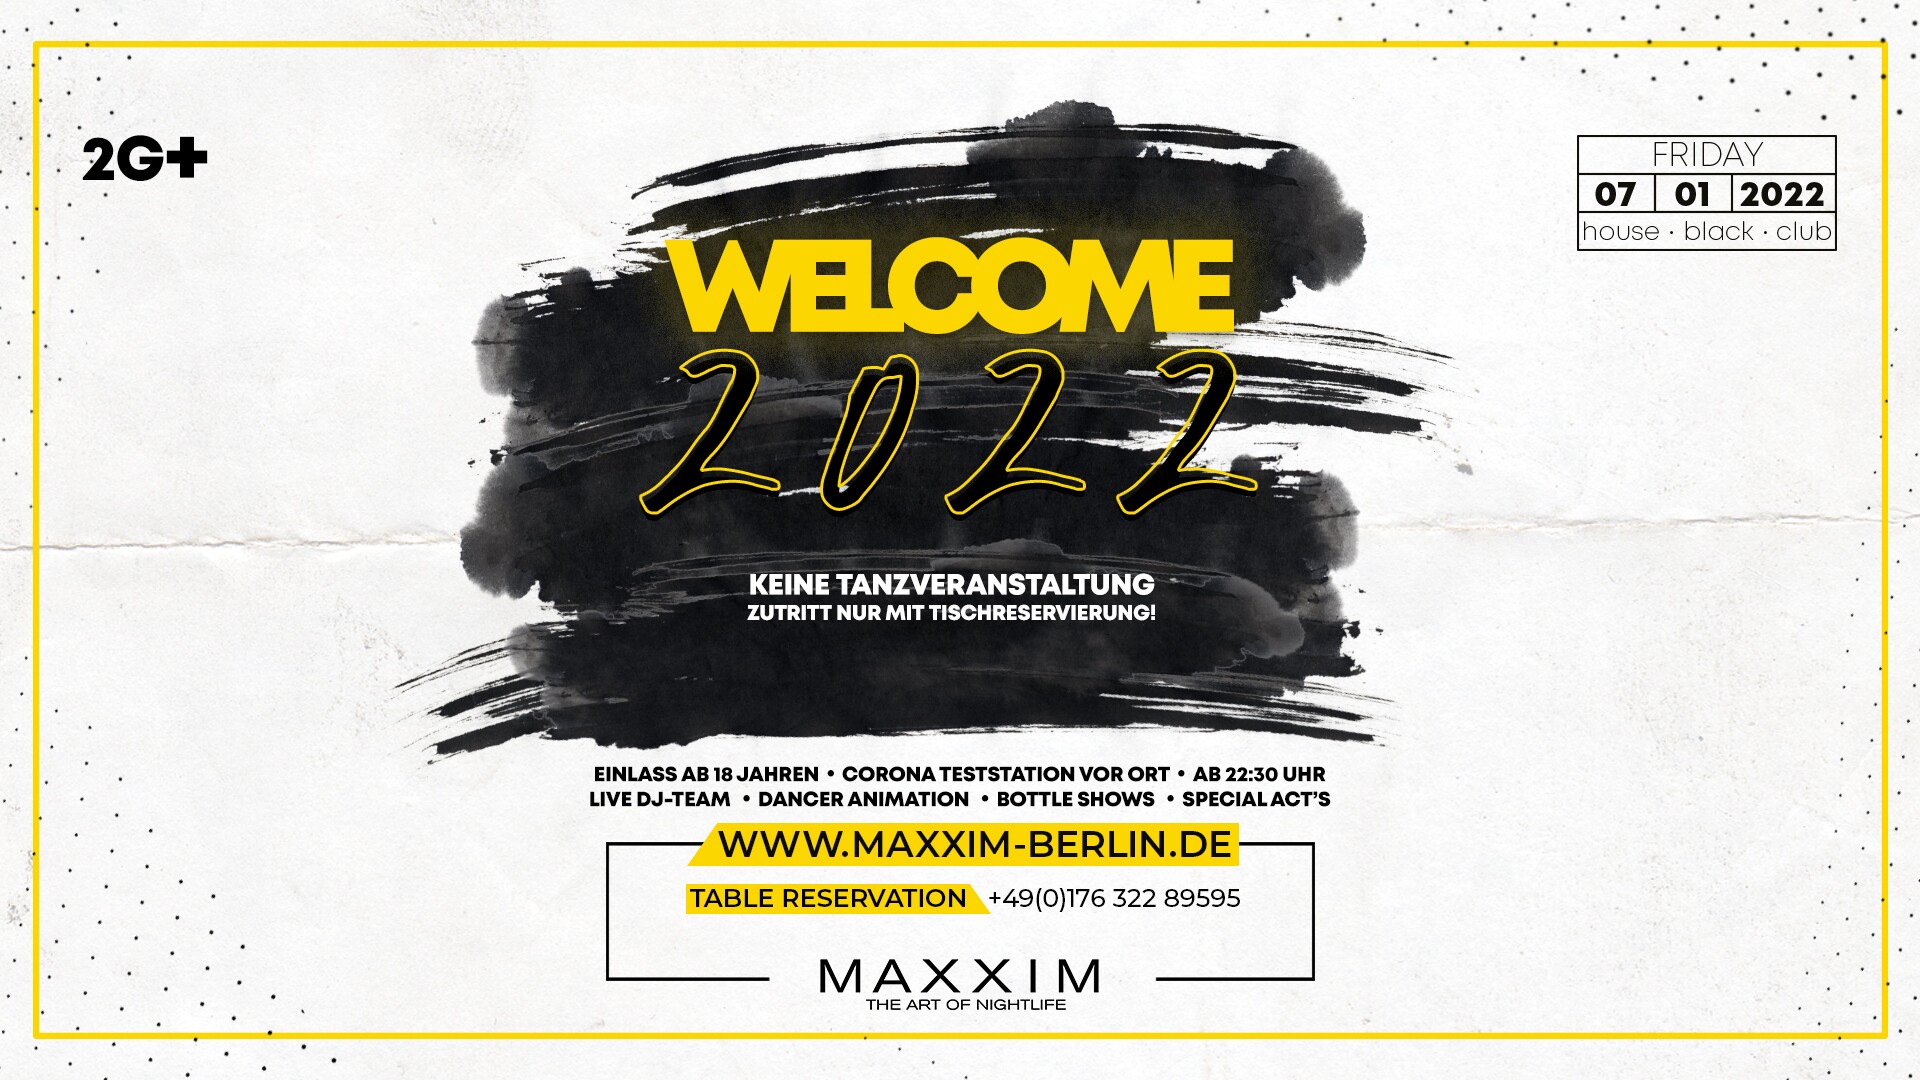 Maxxim Berlin Eventflyer #1 vom 07.01.2022